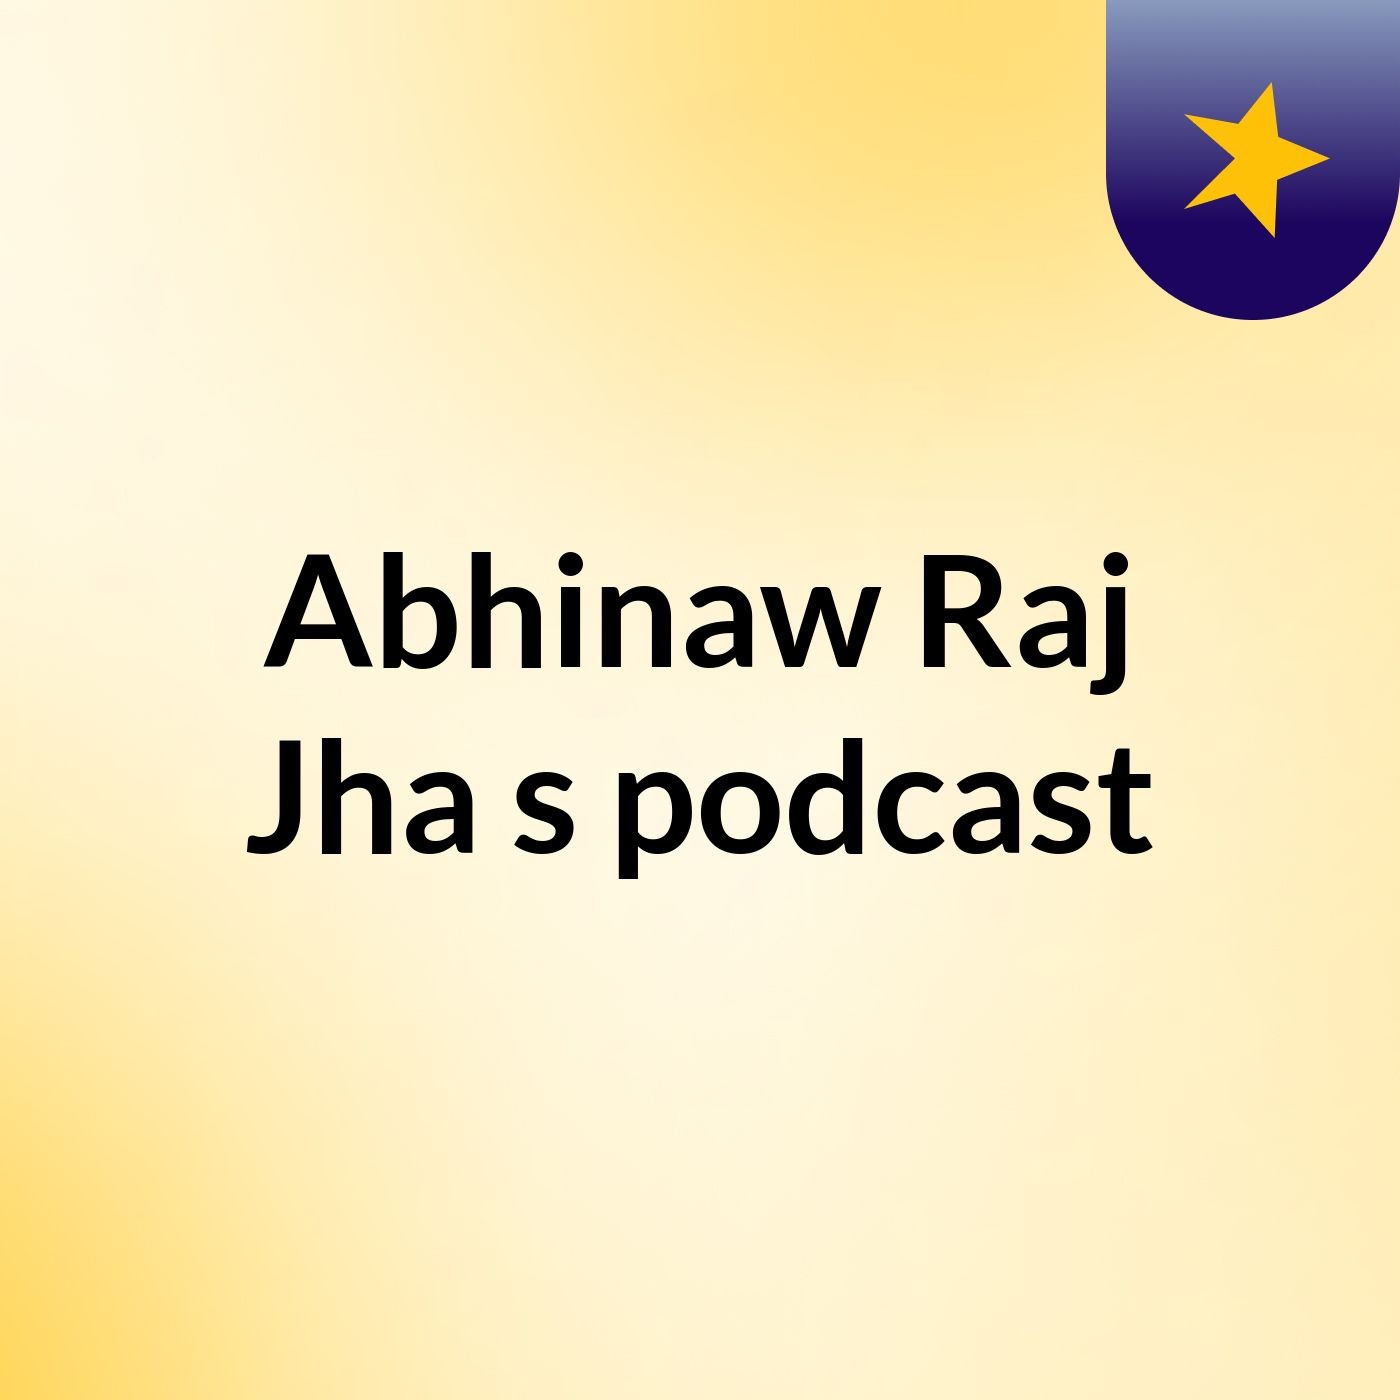 Episode 7 - Abhinaw Raj Jha's podcast Yaari